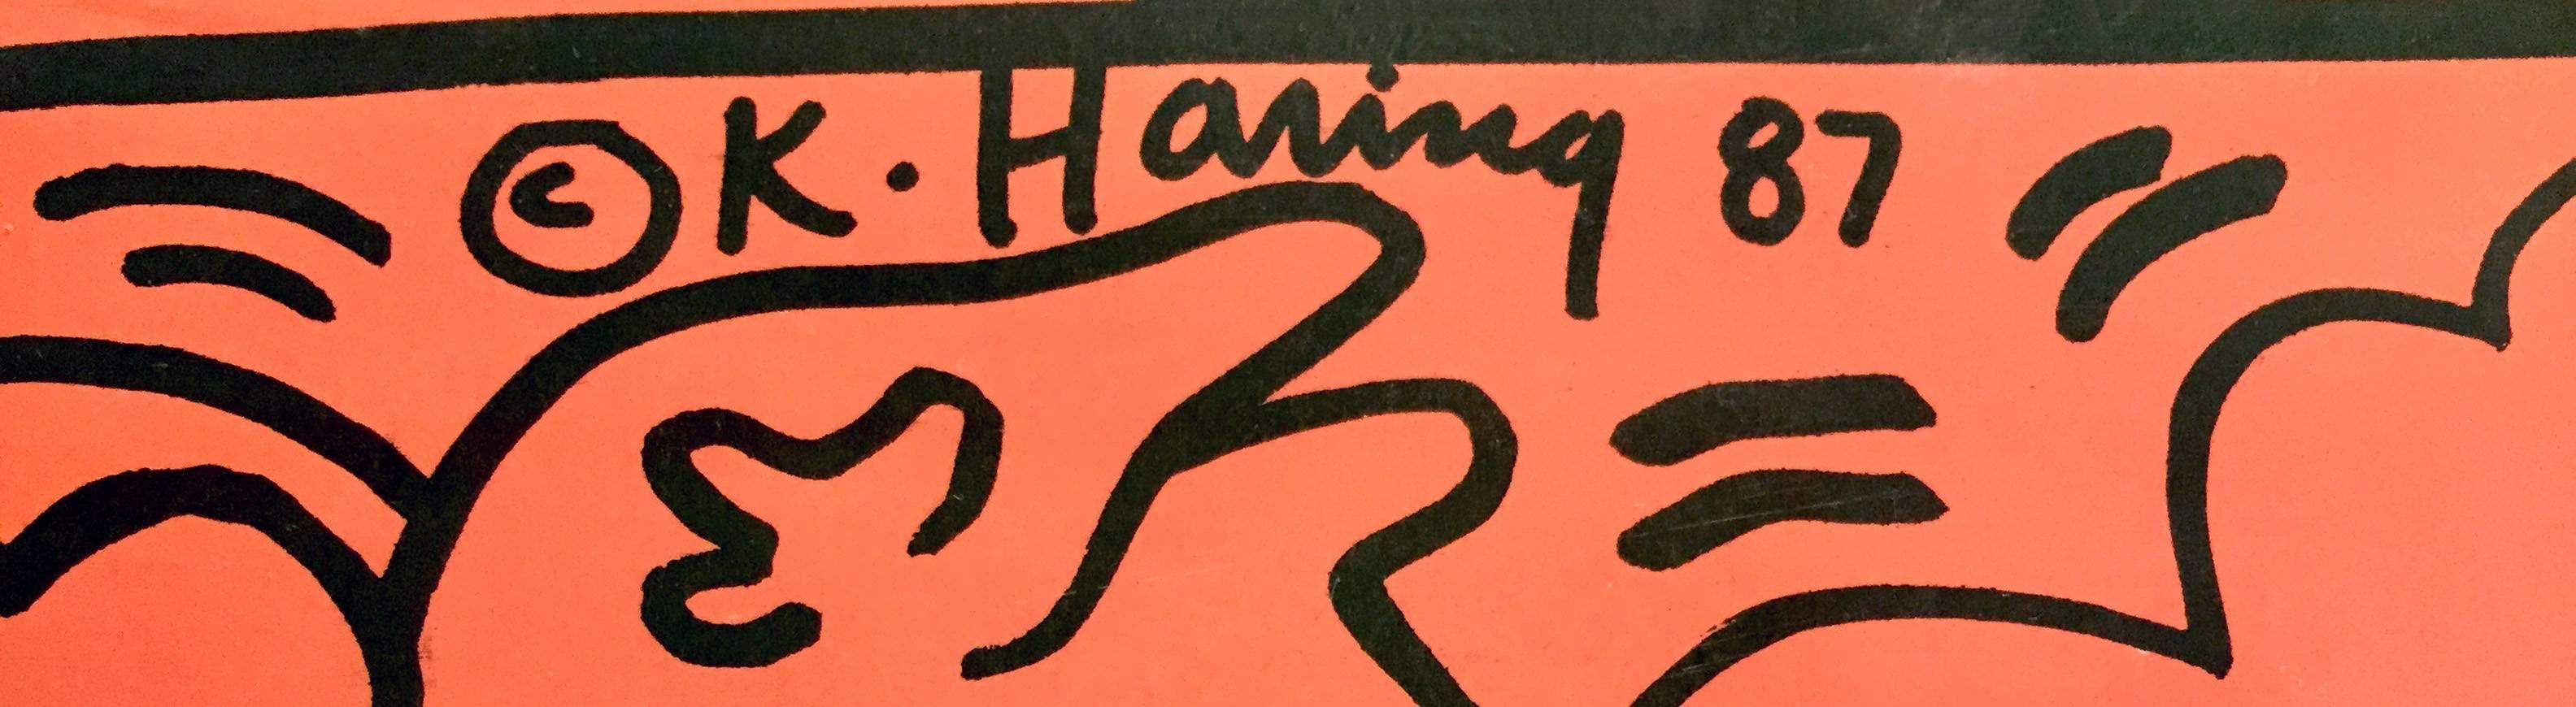 Rare Keith Haring Vinyl Record Art 1